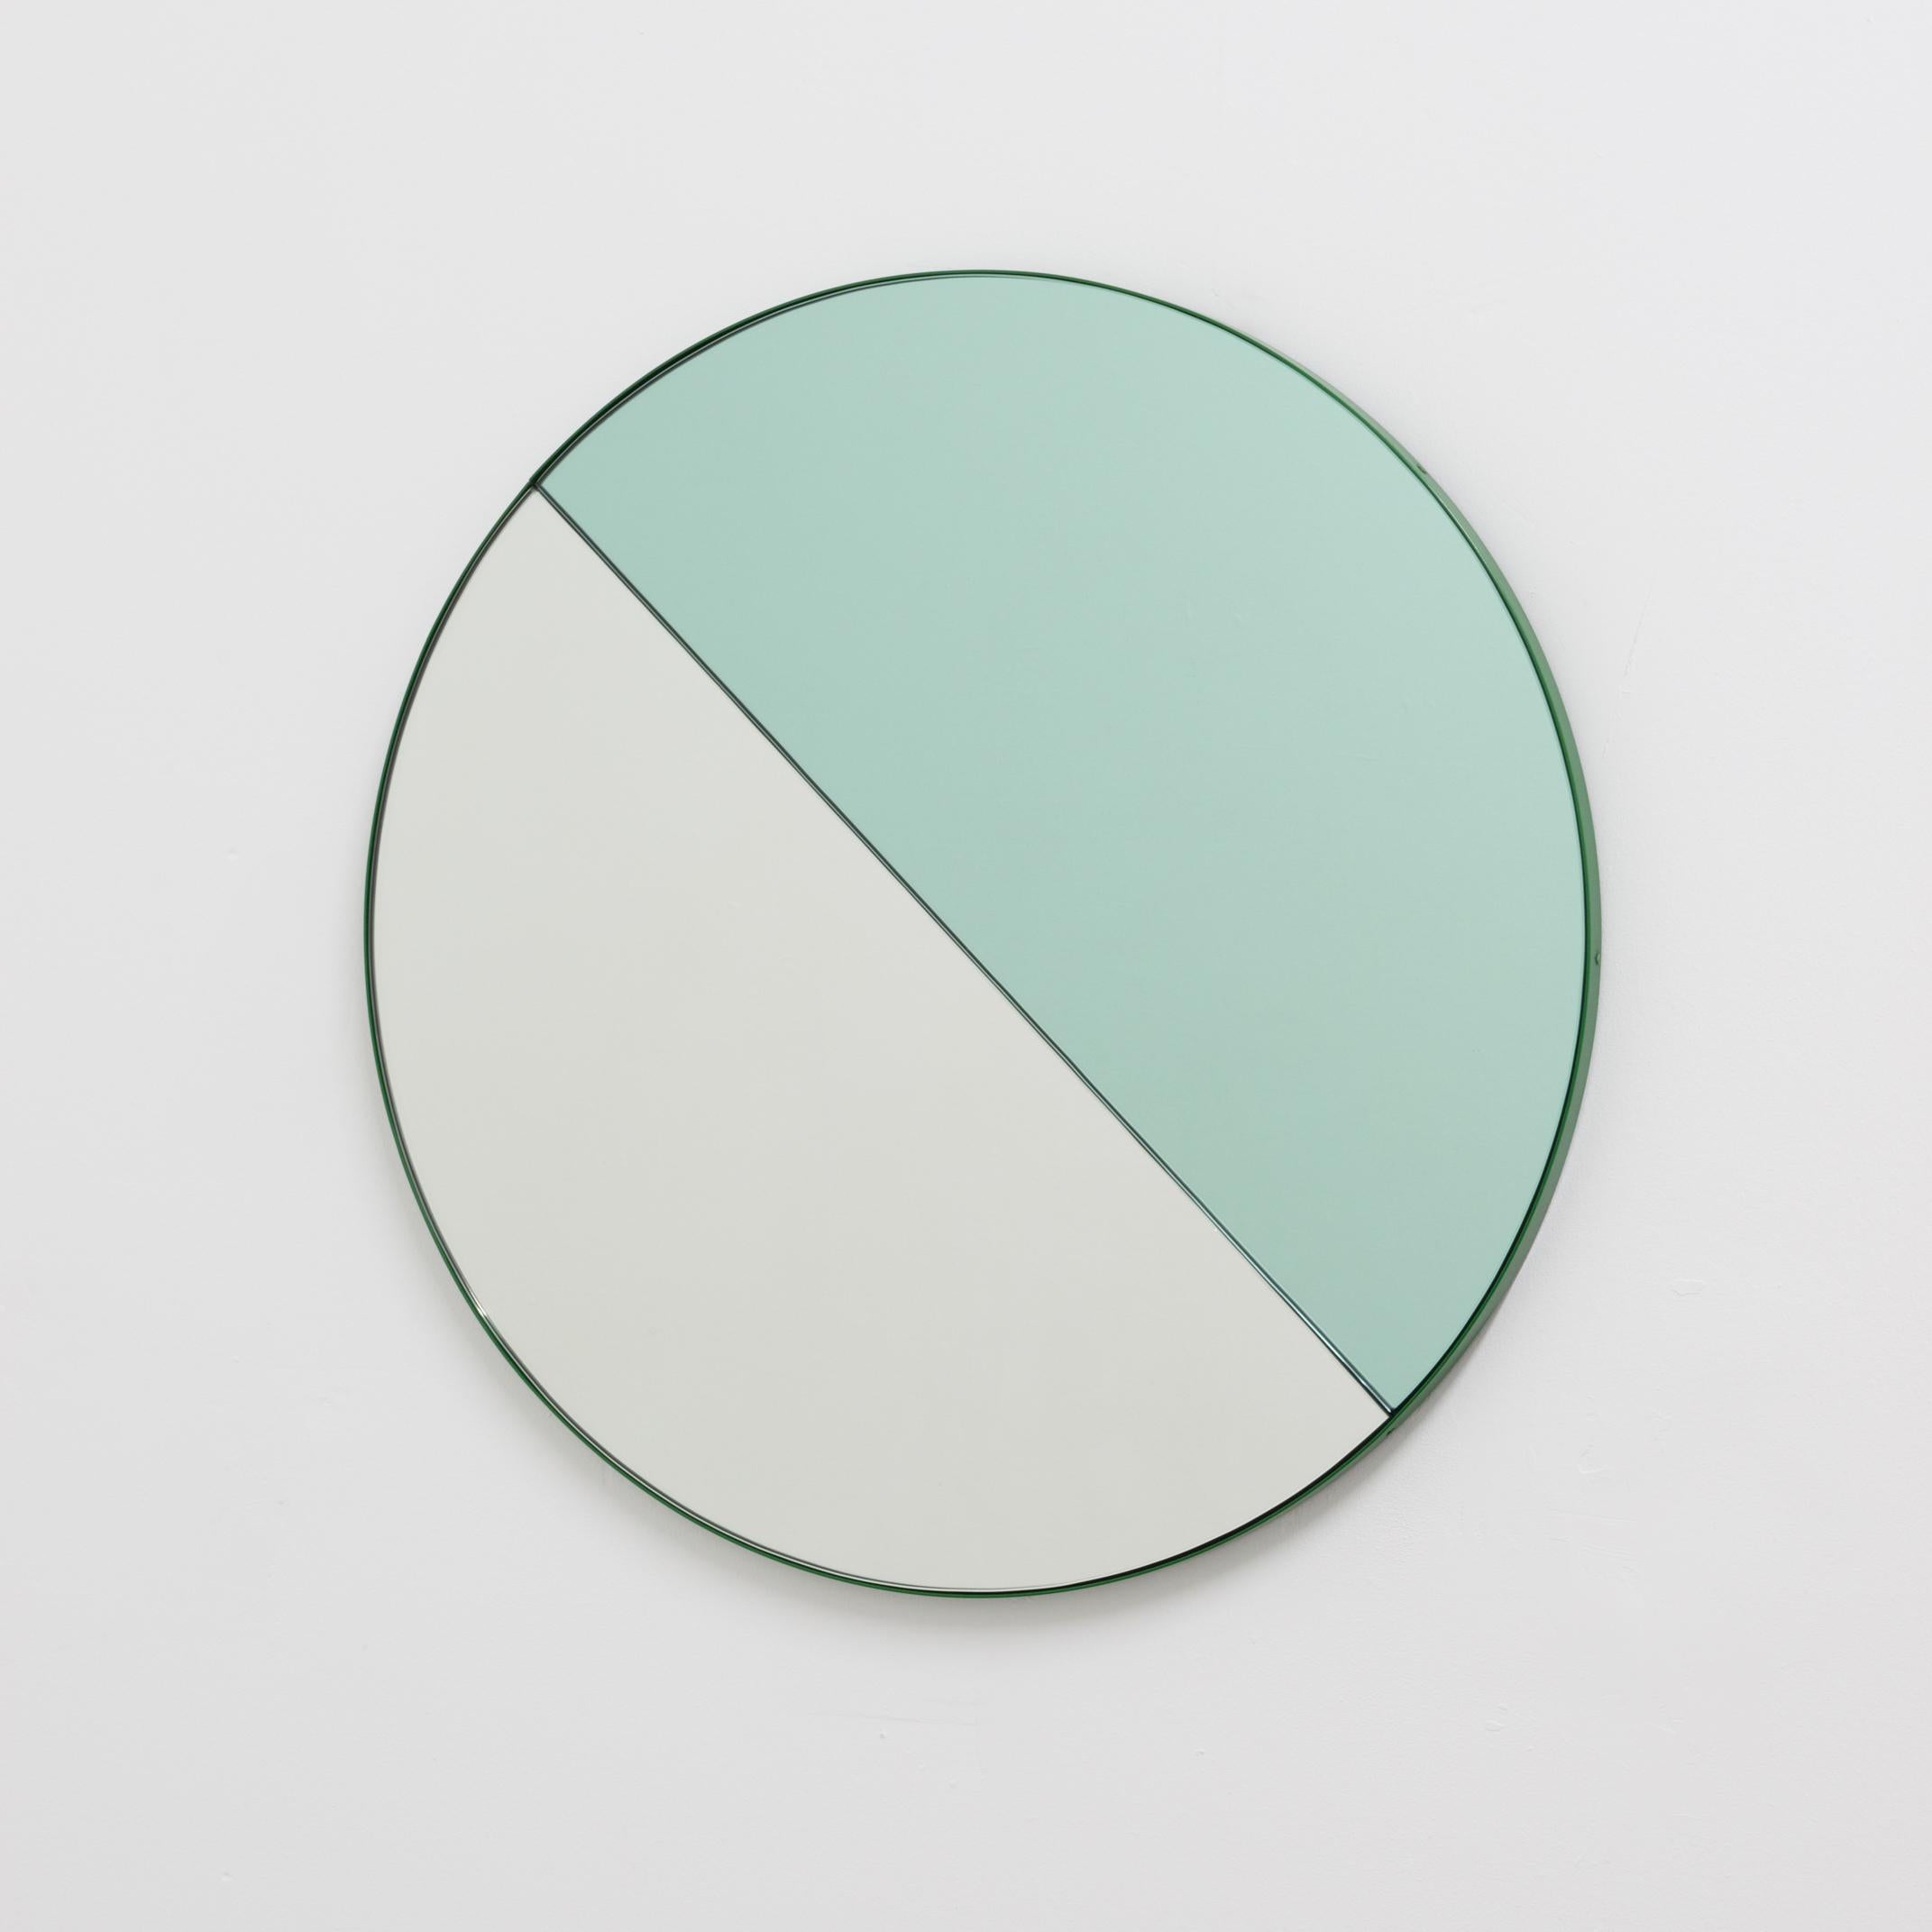 Orbis Dualis Mixed 'Green + Silver' Round Mirror with Green Frame, Medium 6